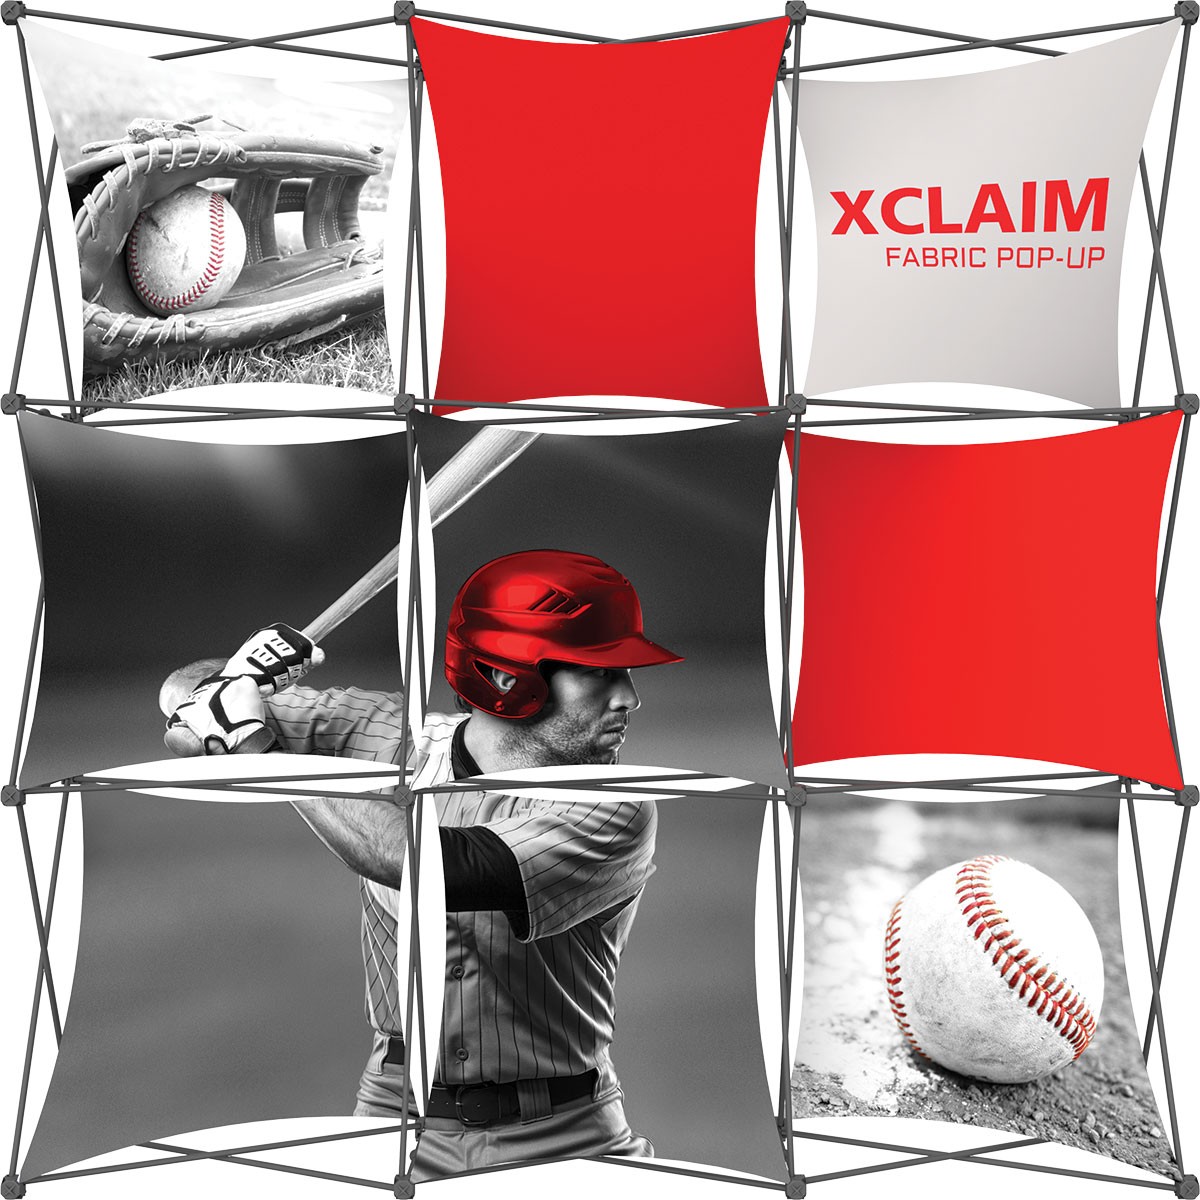 XClaim 8' Fabric Pop Up Display Kit 1